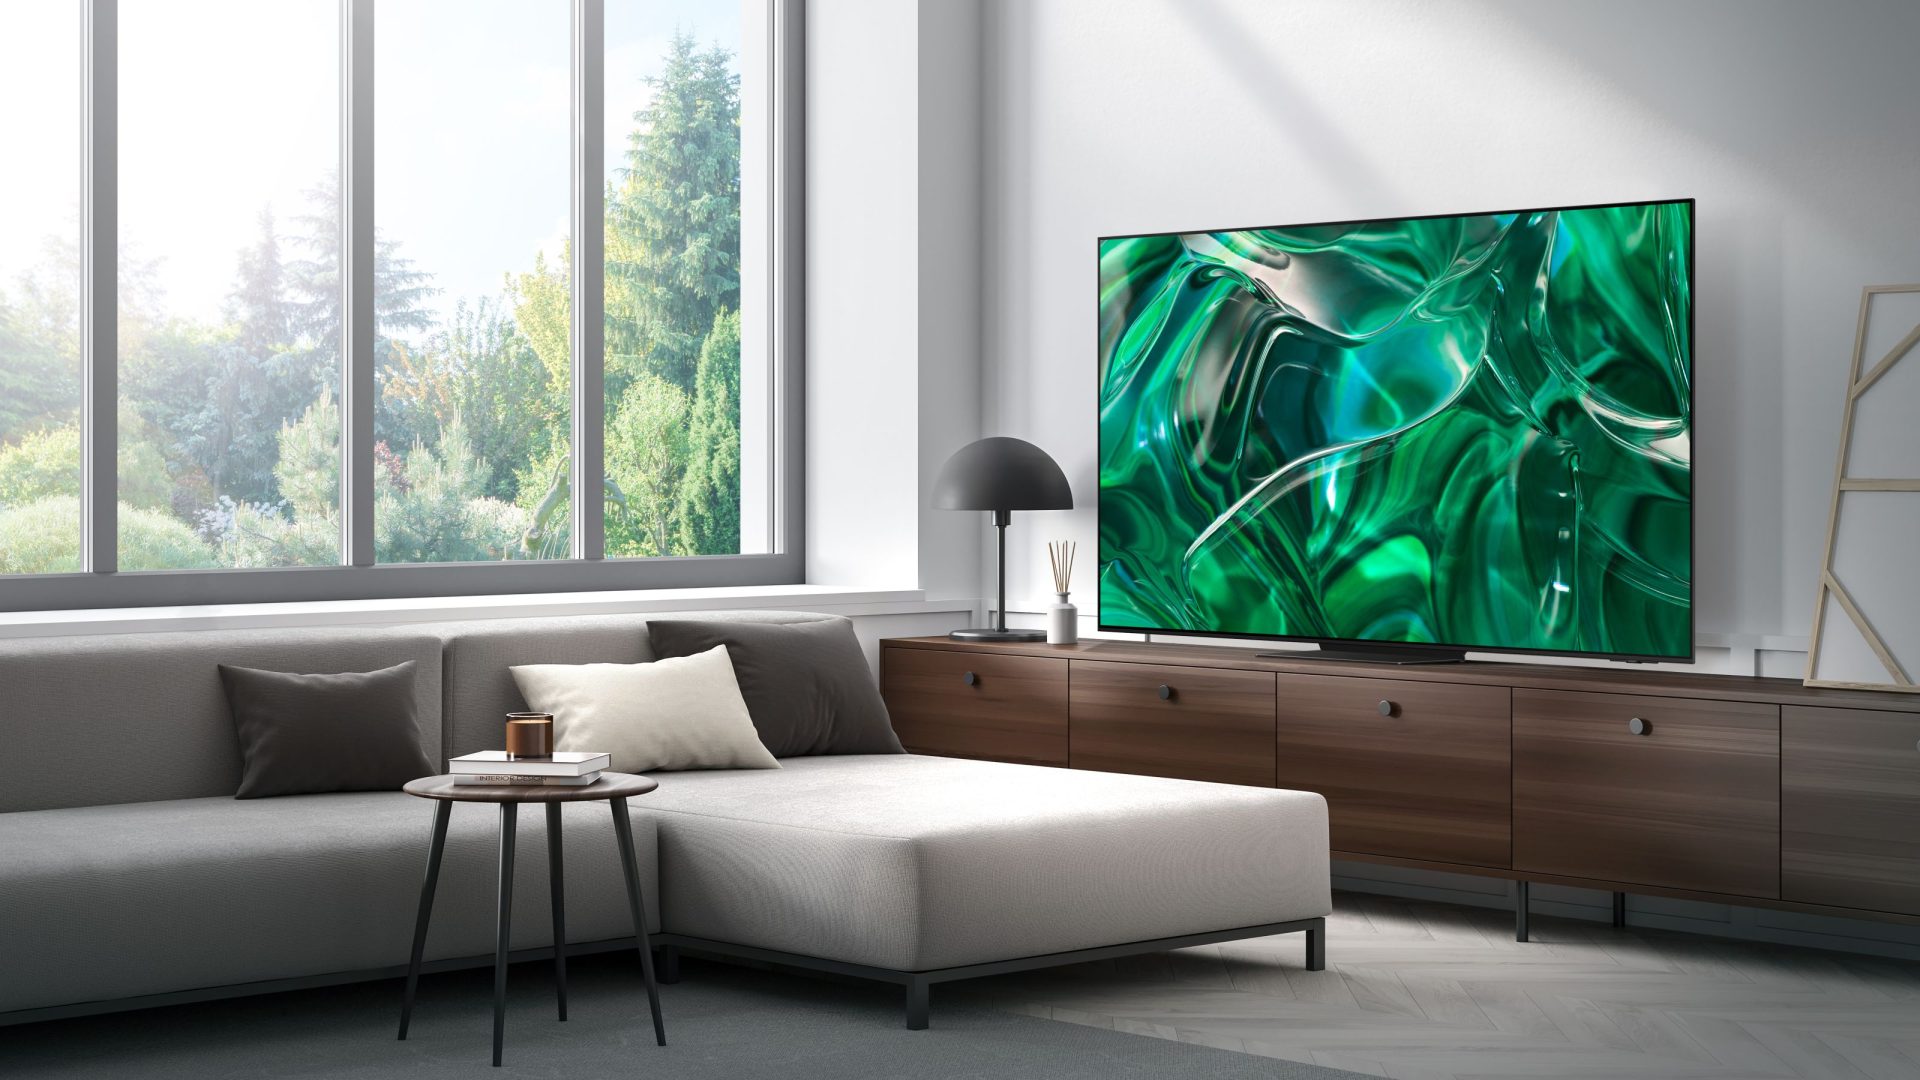 Telewizor OLED S95C (źródło: Samsung)